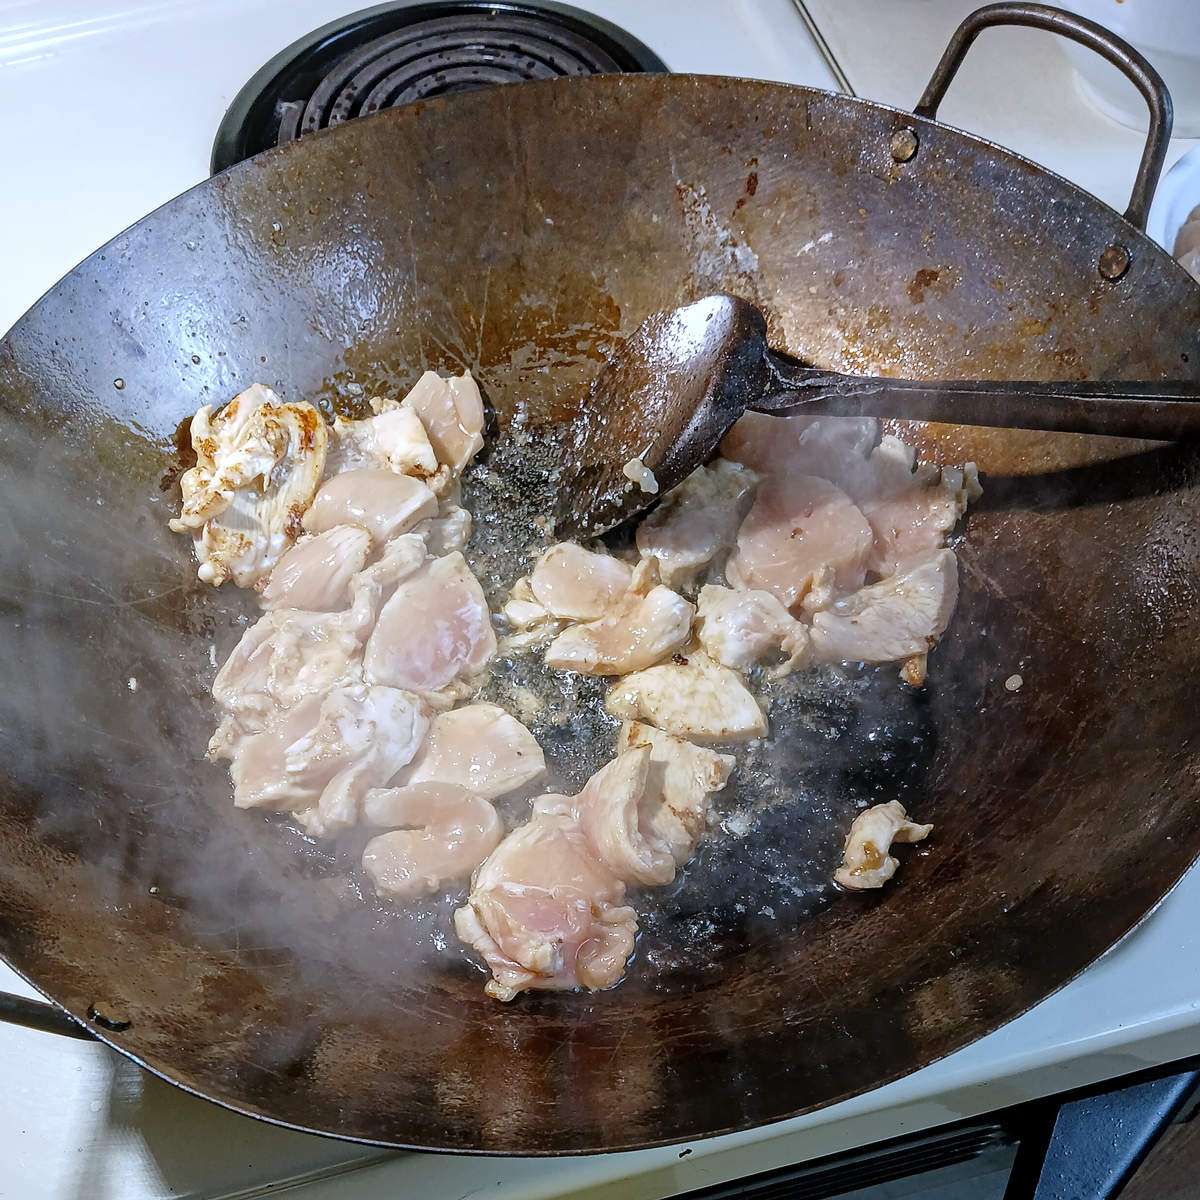 Low sodium chicken stir frying in wok